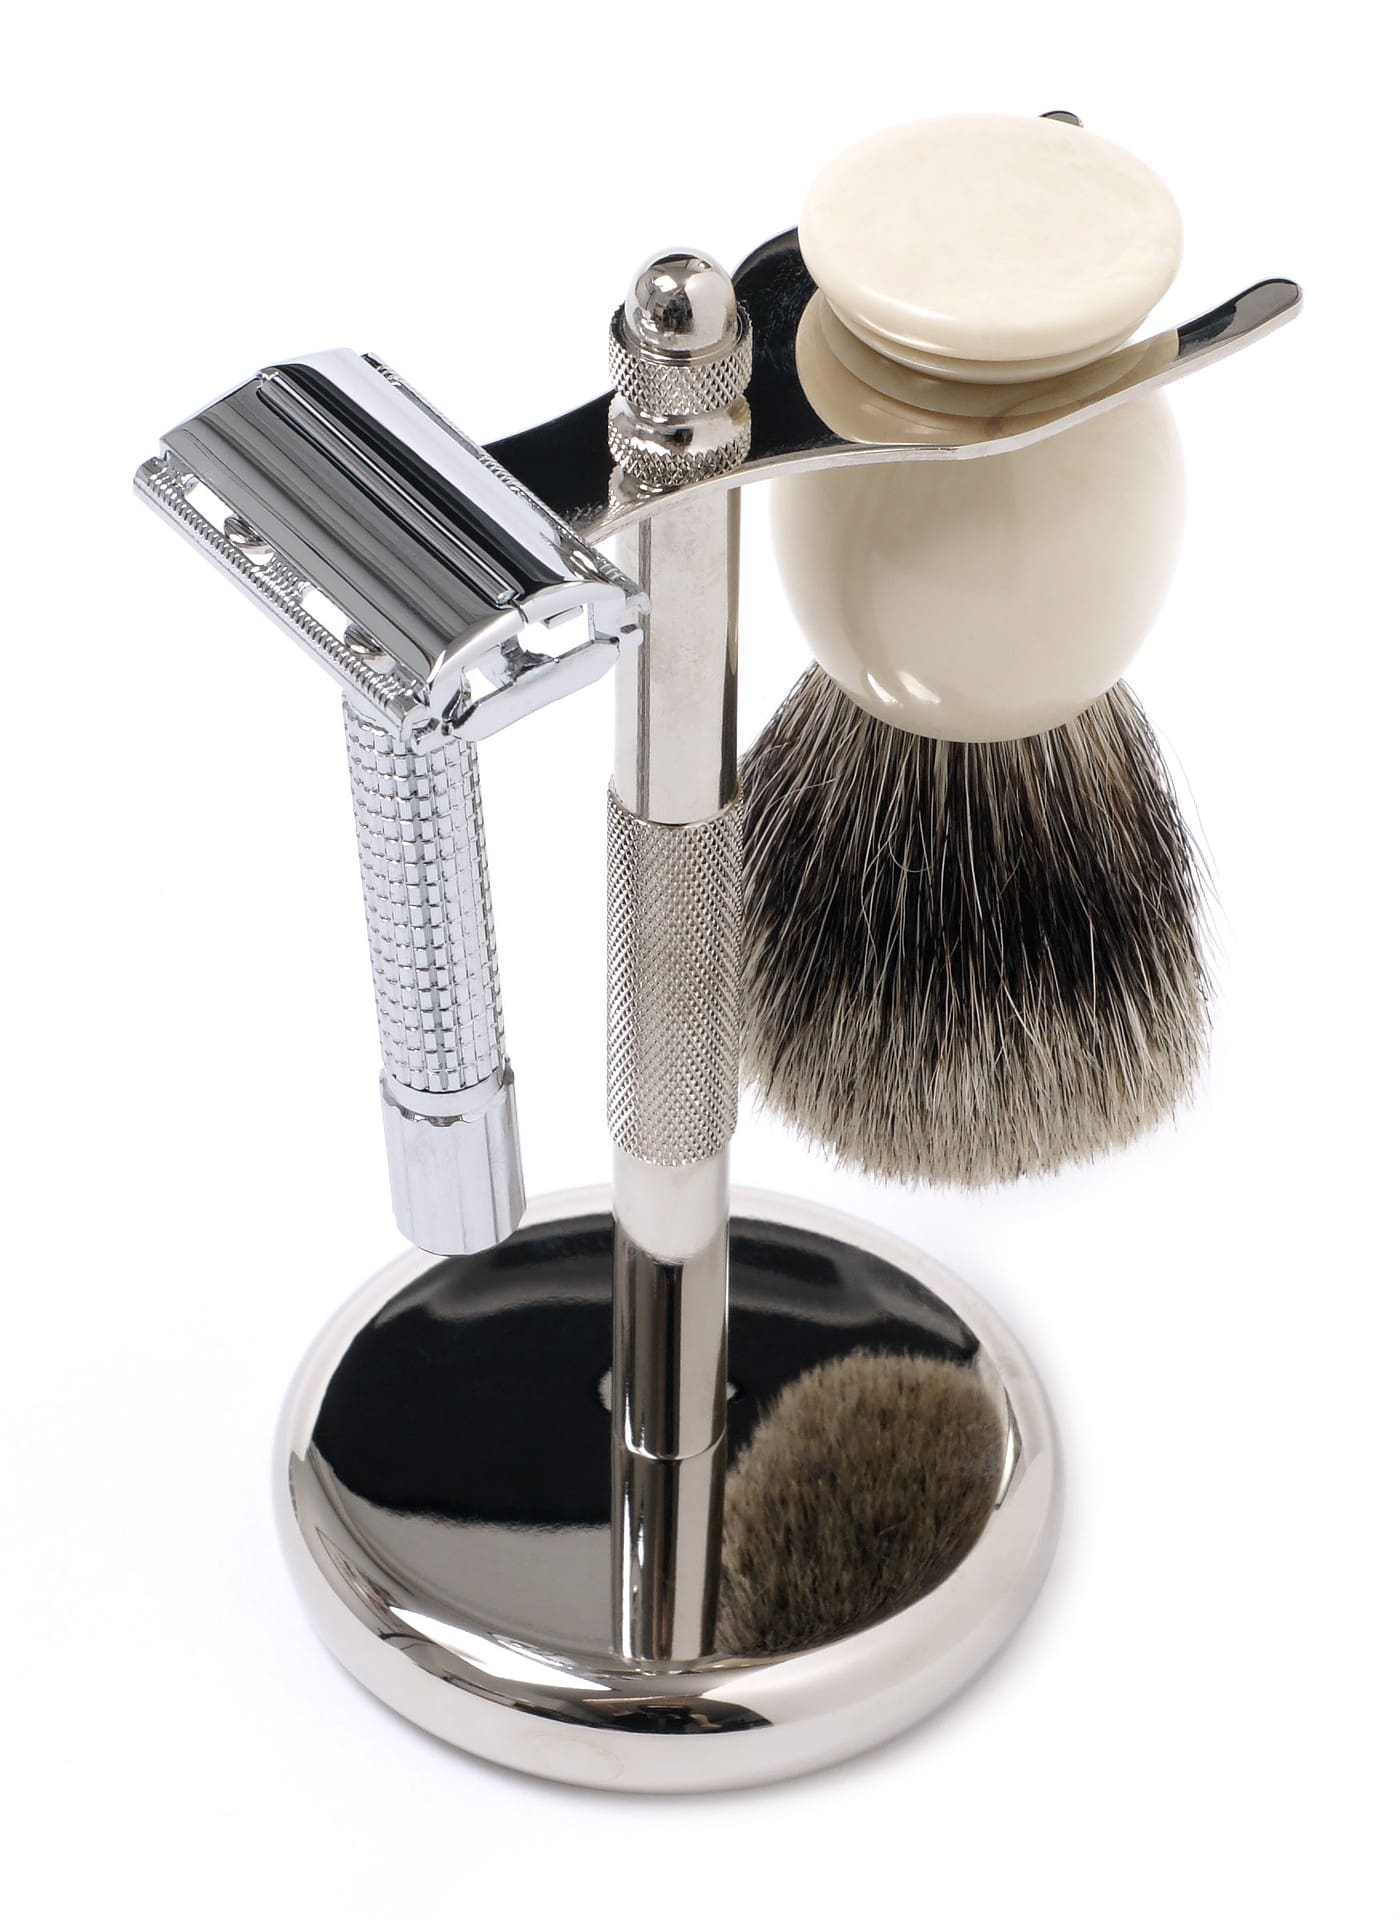 shaving set